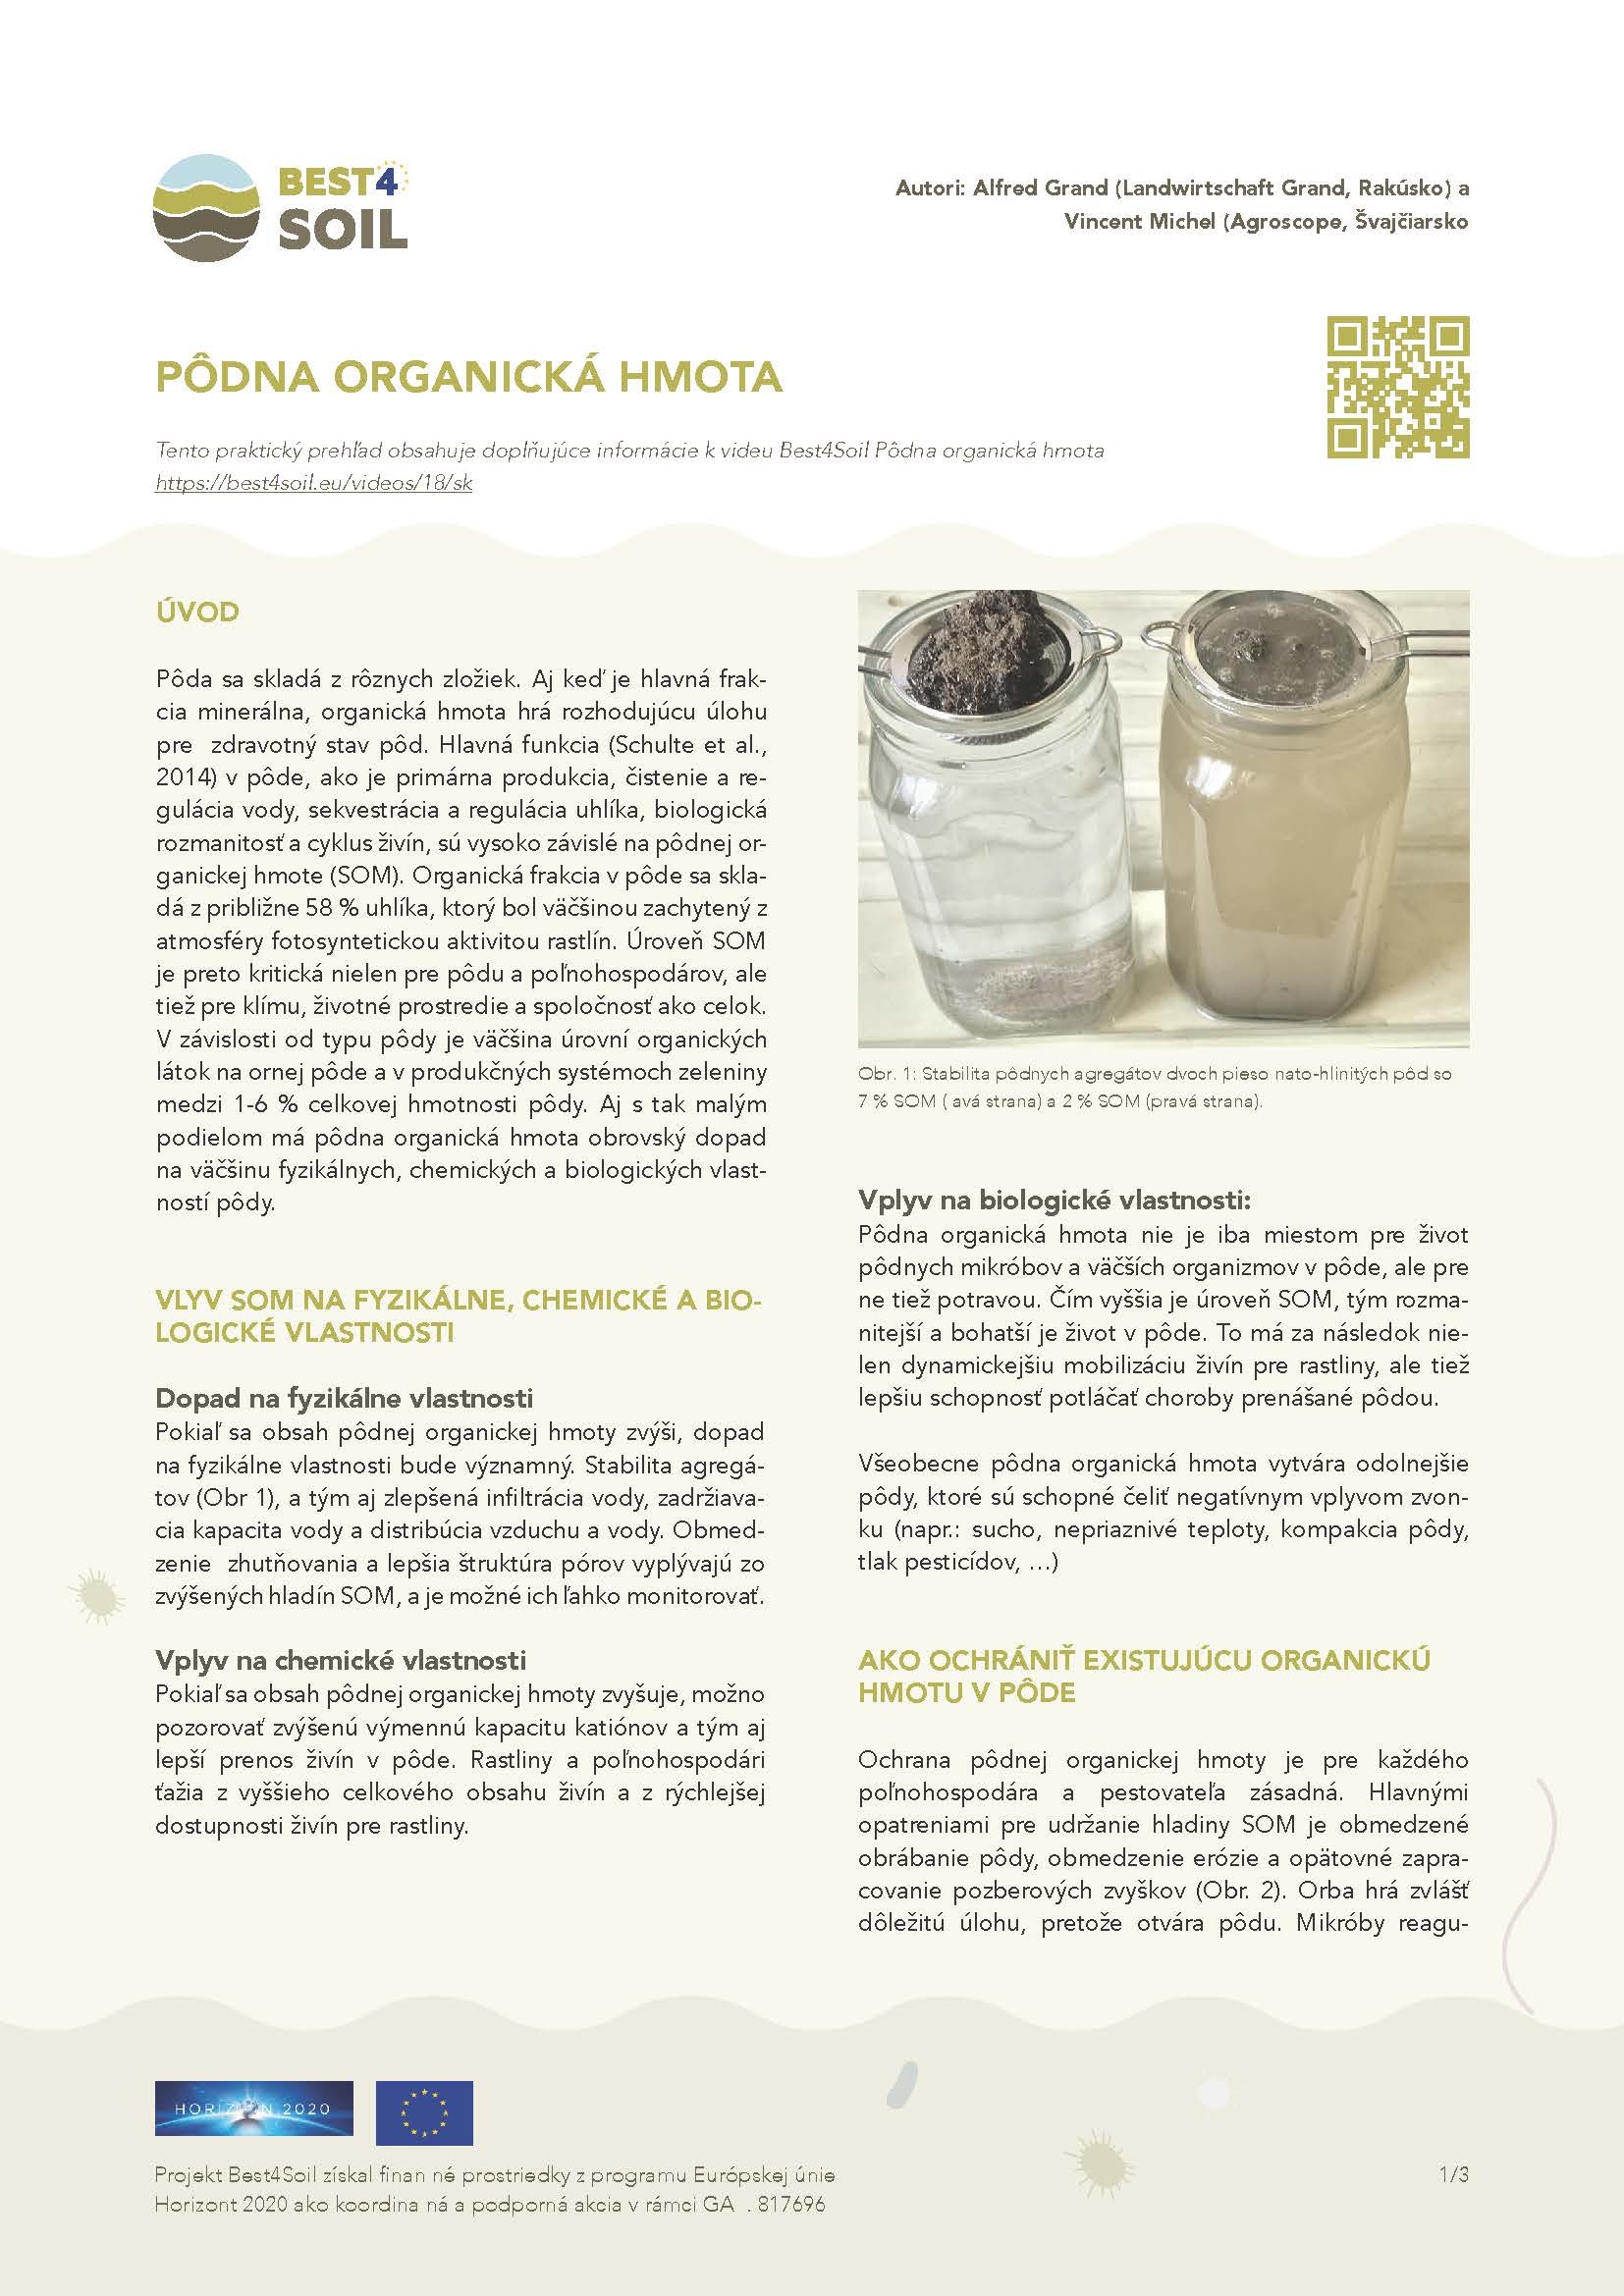 Soil organic matter (Best4Soil Factsheet)